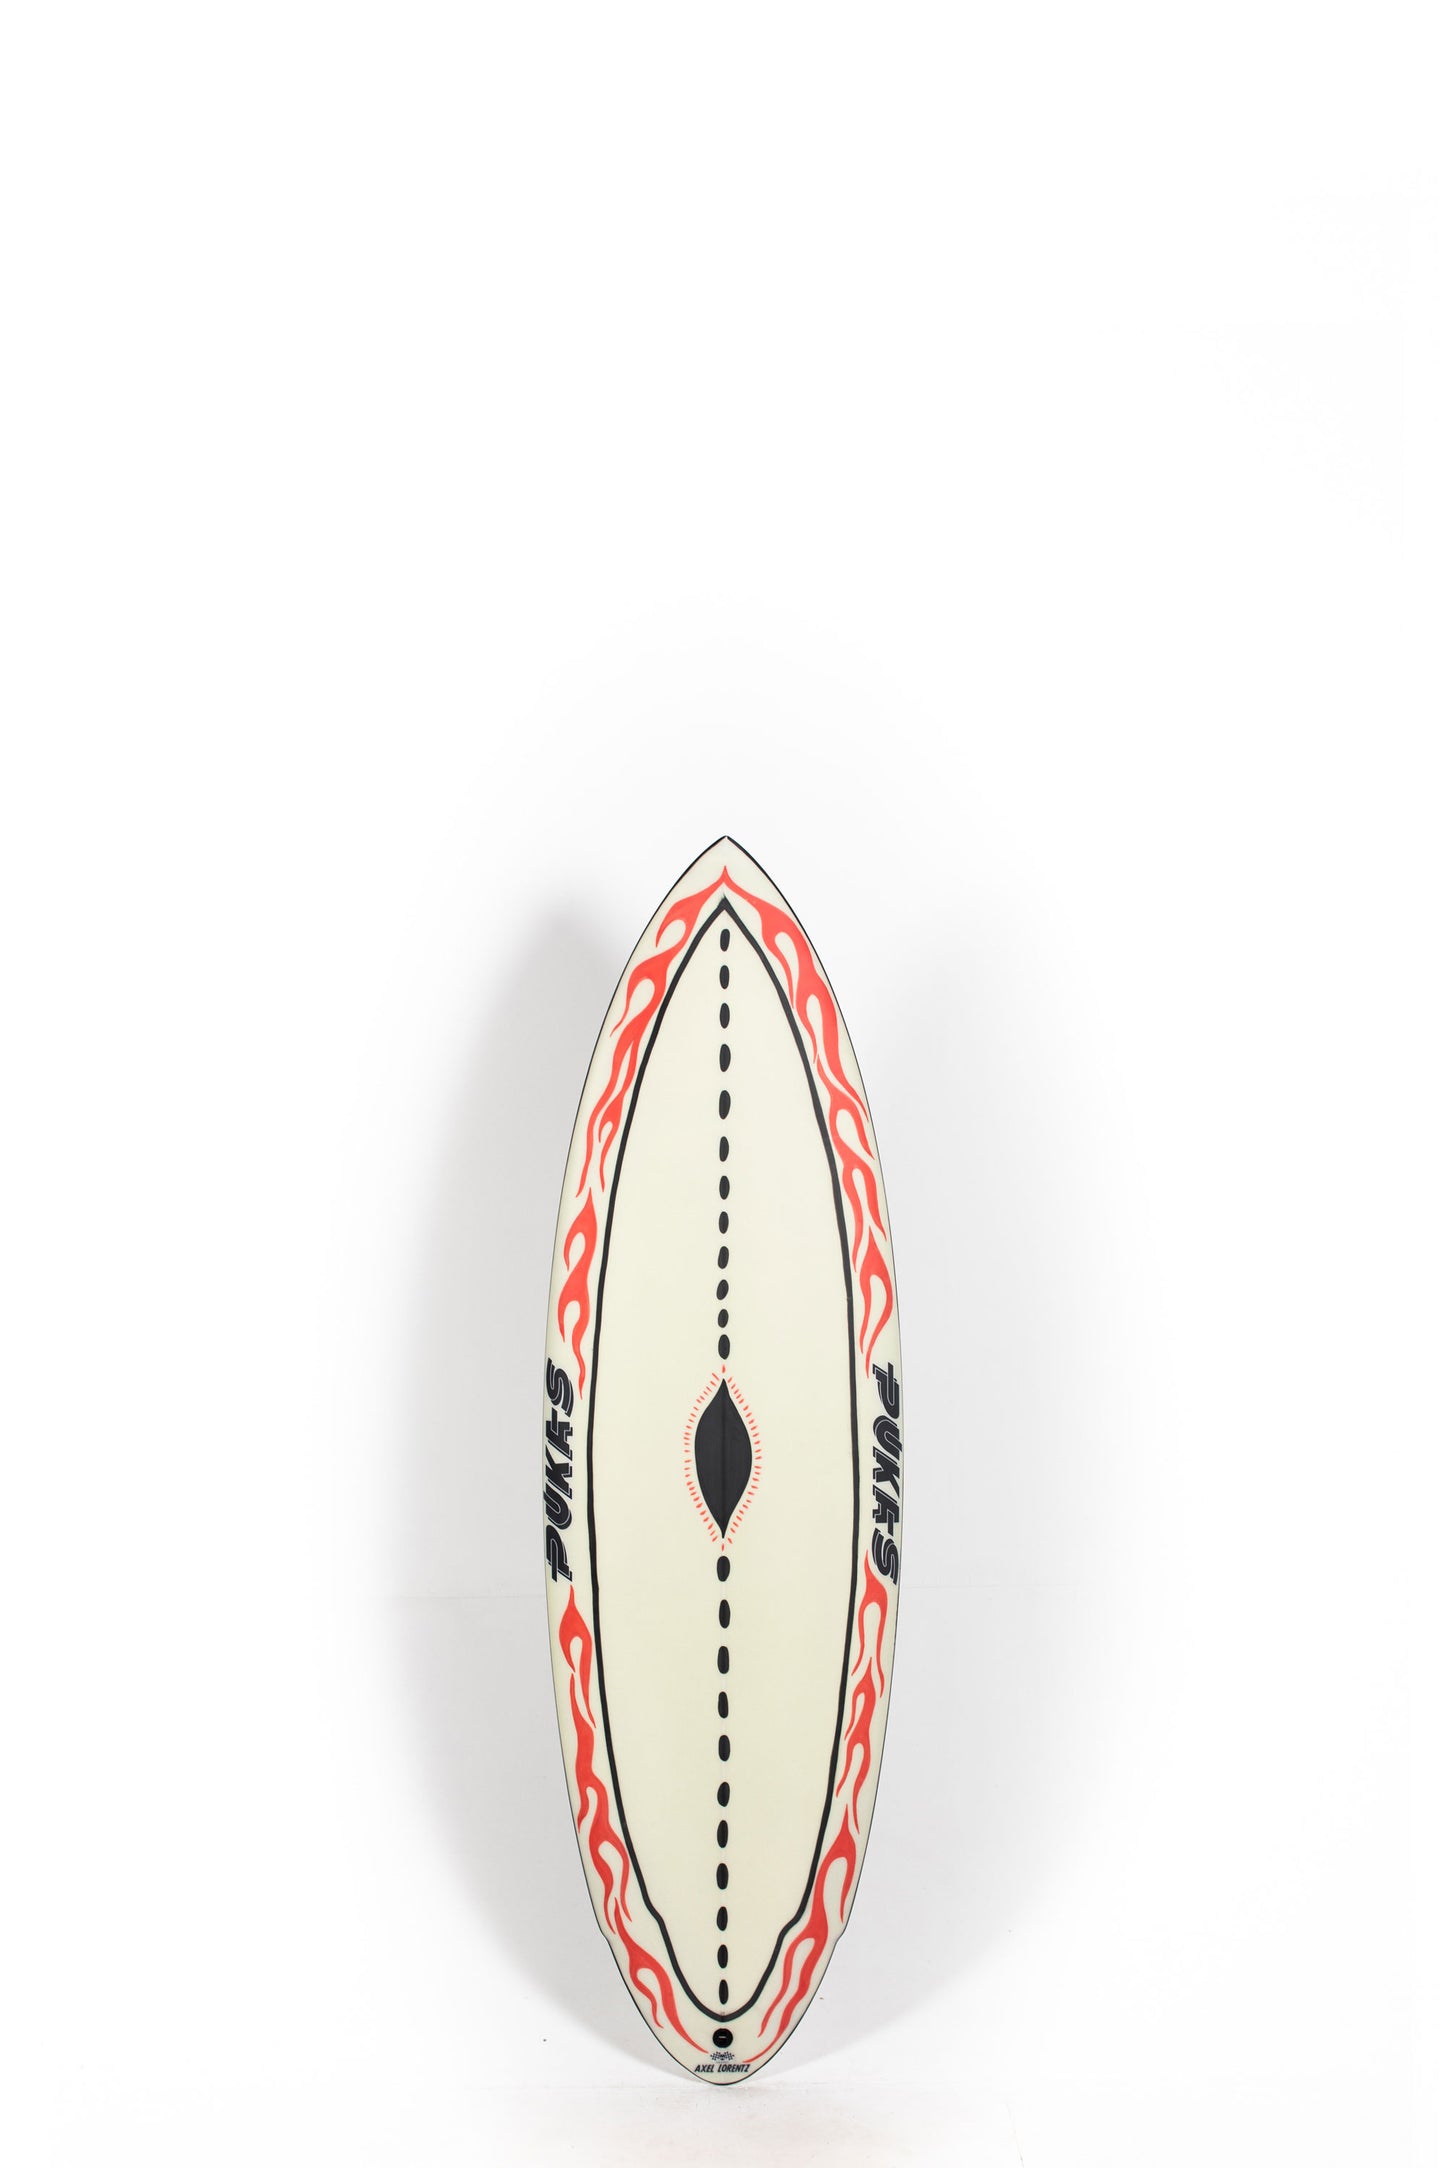 Pukas Surf Shop - Pukas Surfboards - ACID PLAN by Axel Lorentz - 5'5" x 19 x 2,3 x 25,95L - AX08418